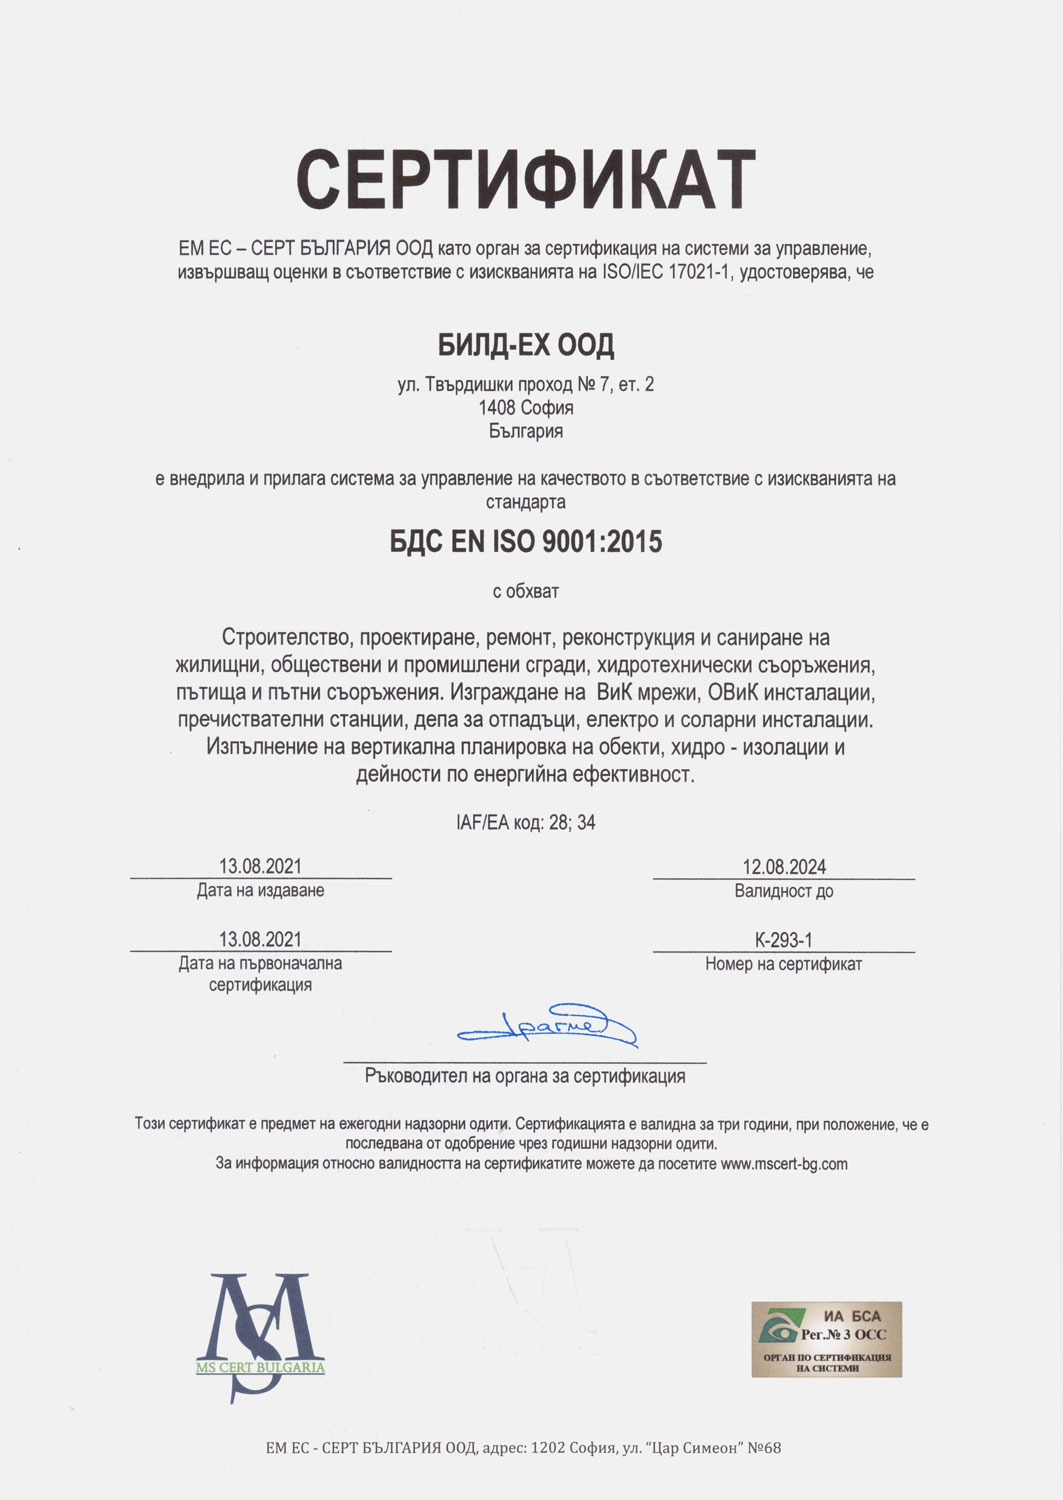 Certificate ISO 9001-Build-ex